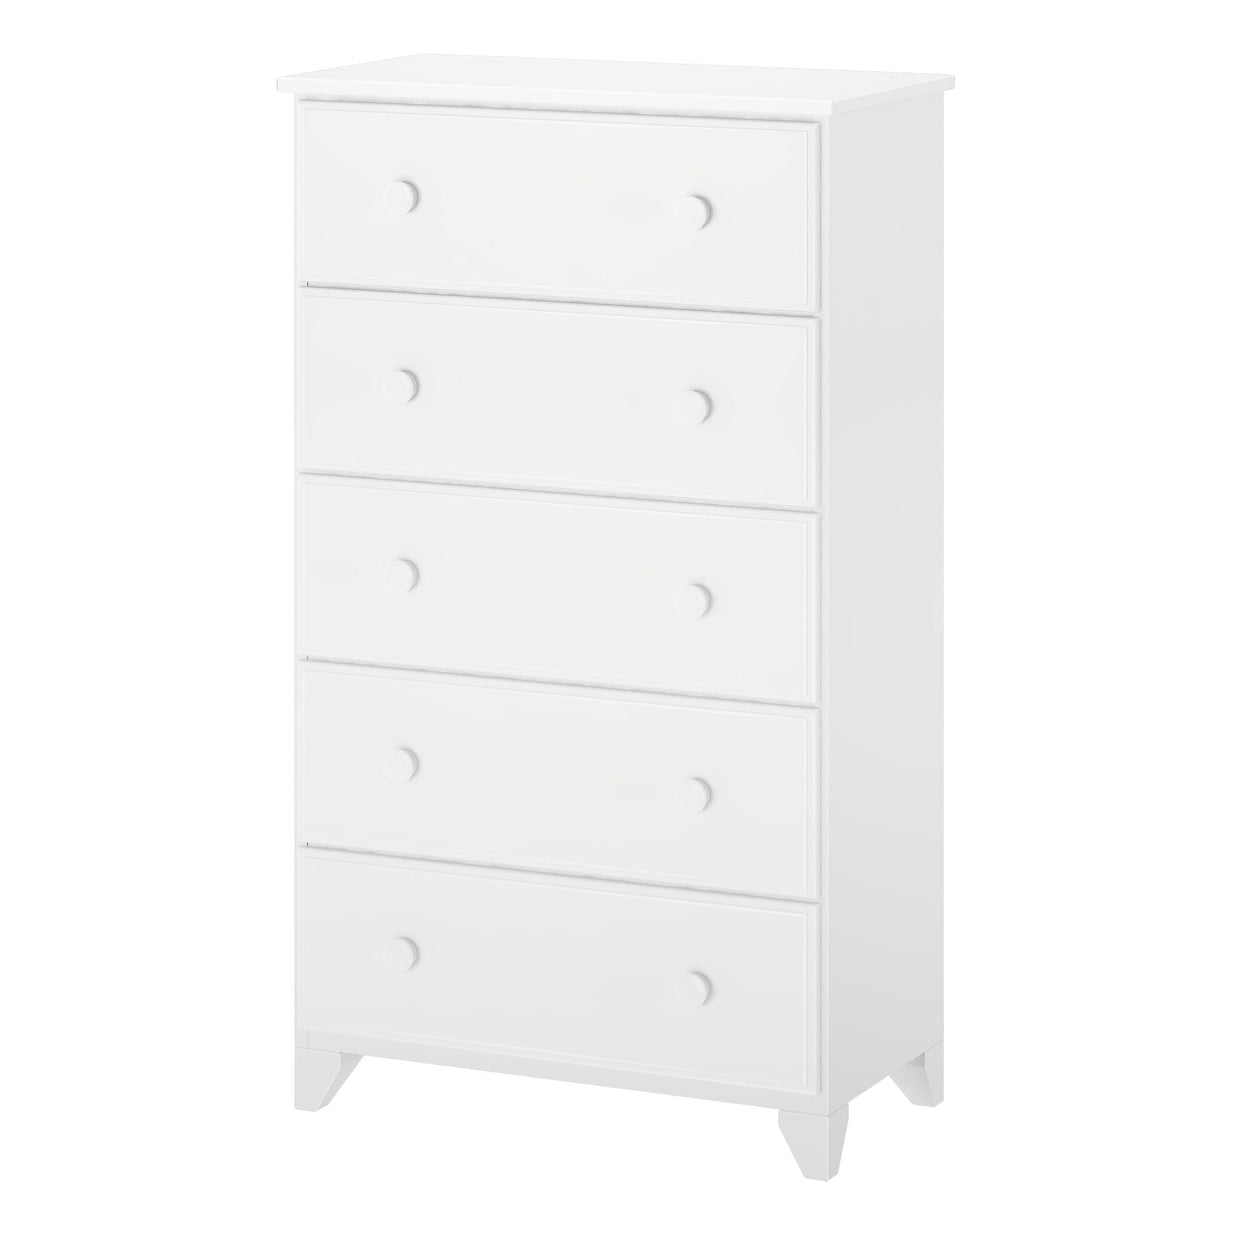 180015-002 : Furniture 5-Drawer Dresser, White